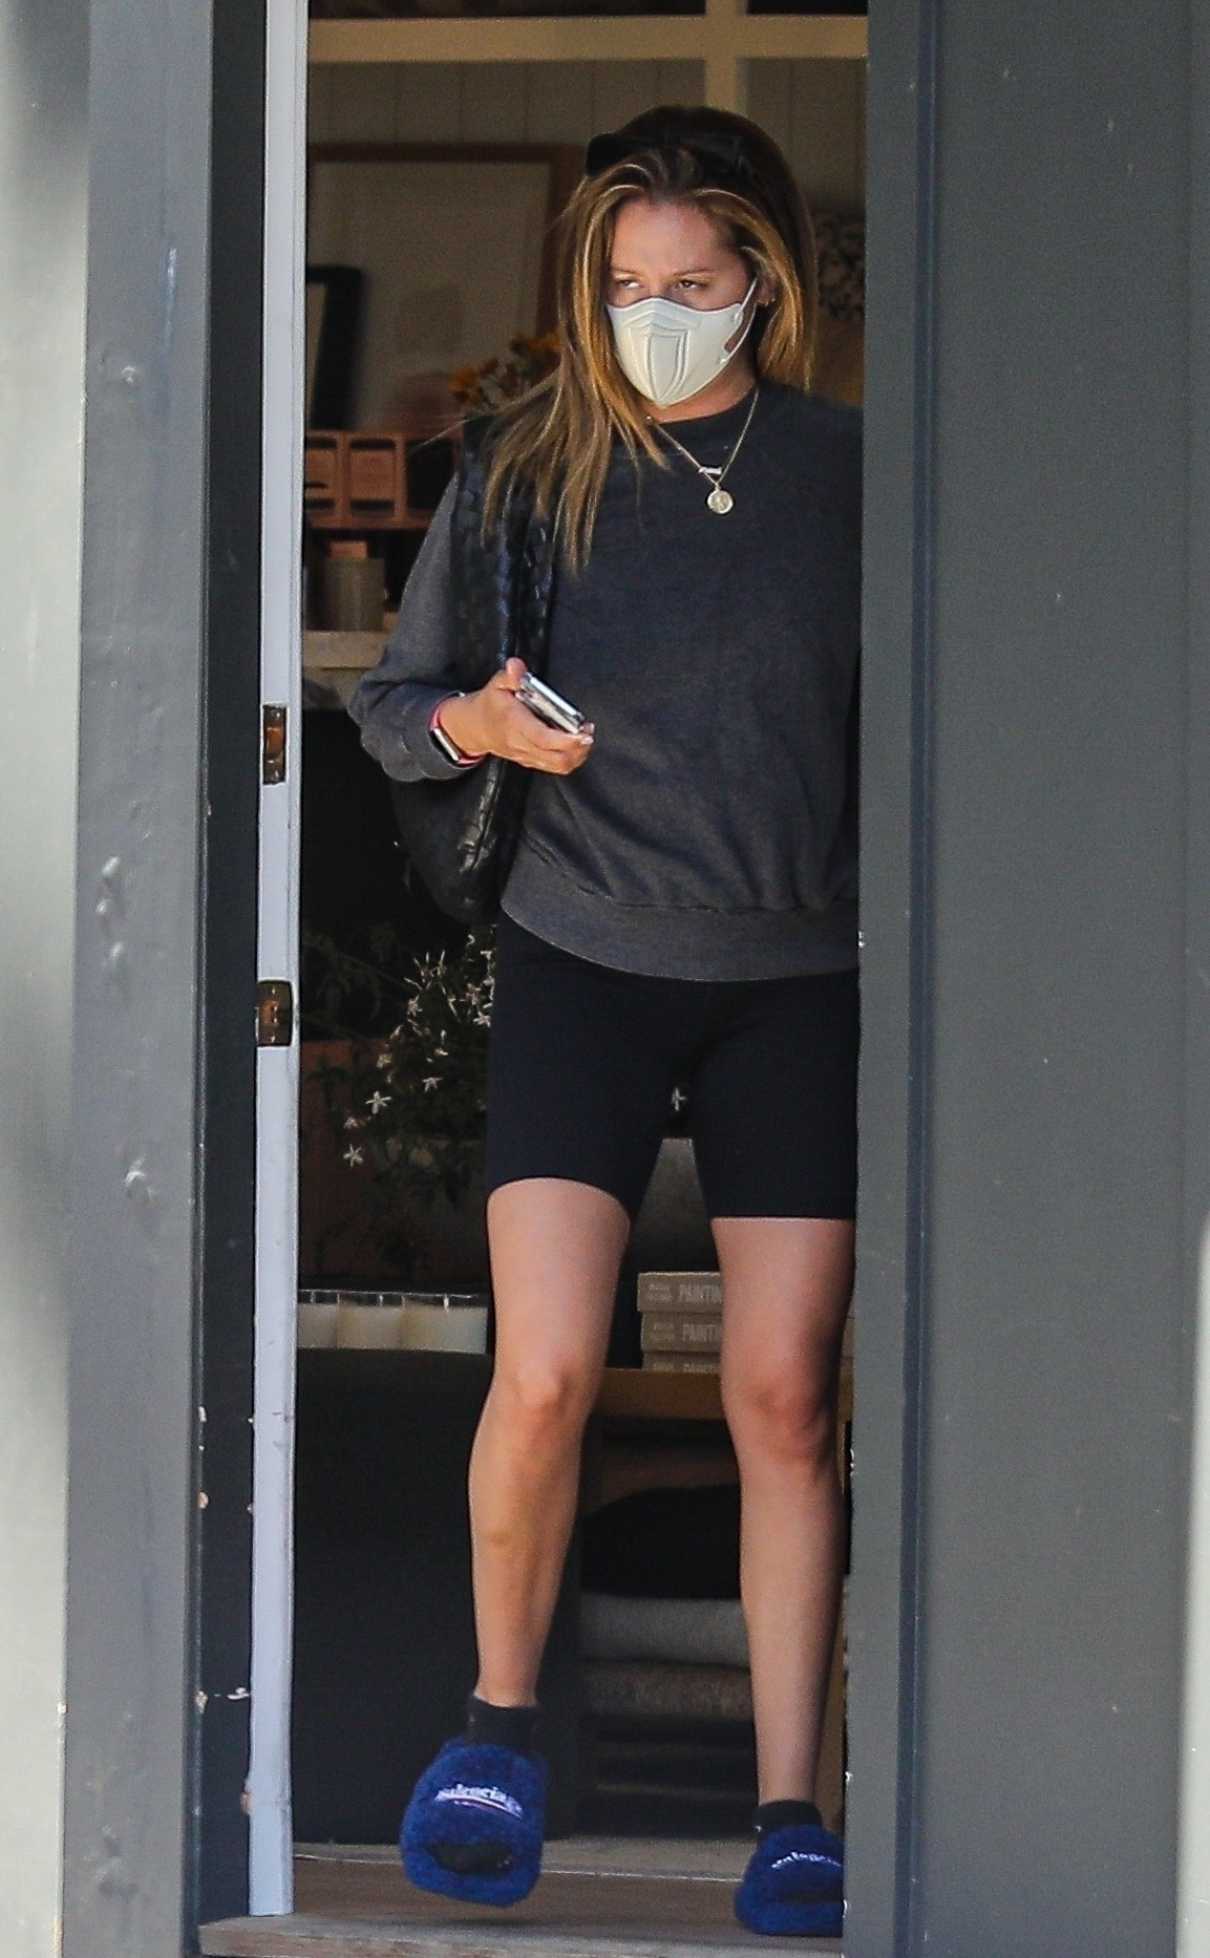 Ashley Tisdale in a Black Spandex Shorts